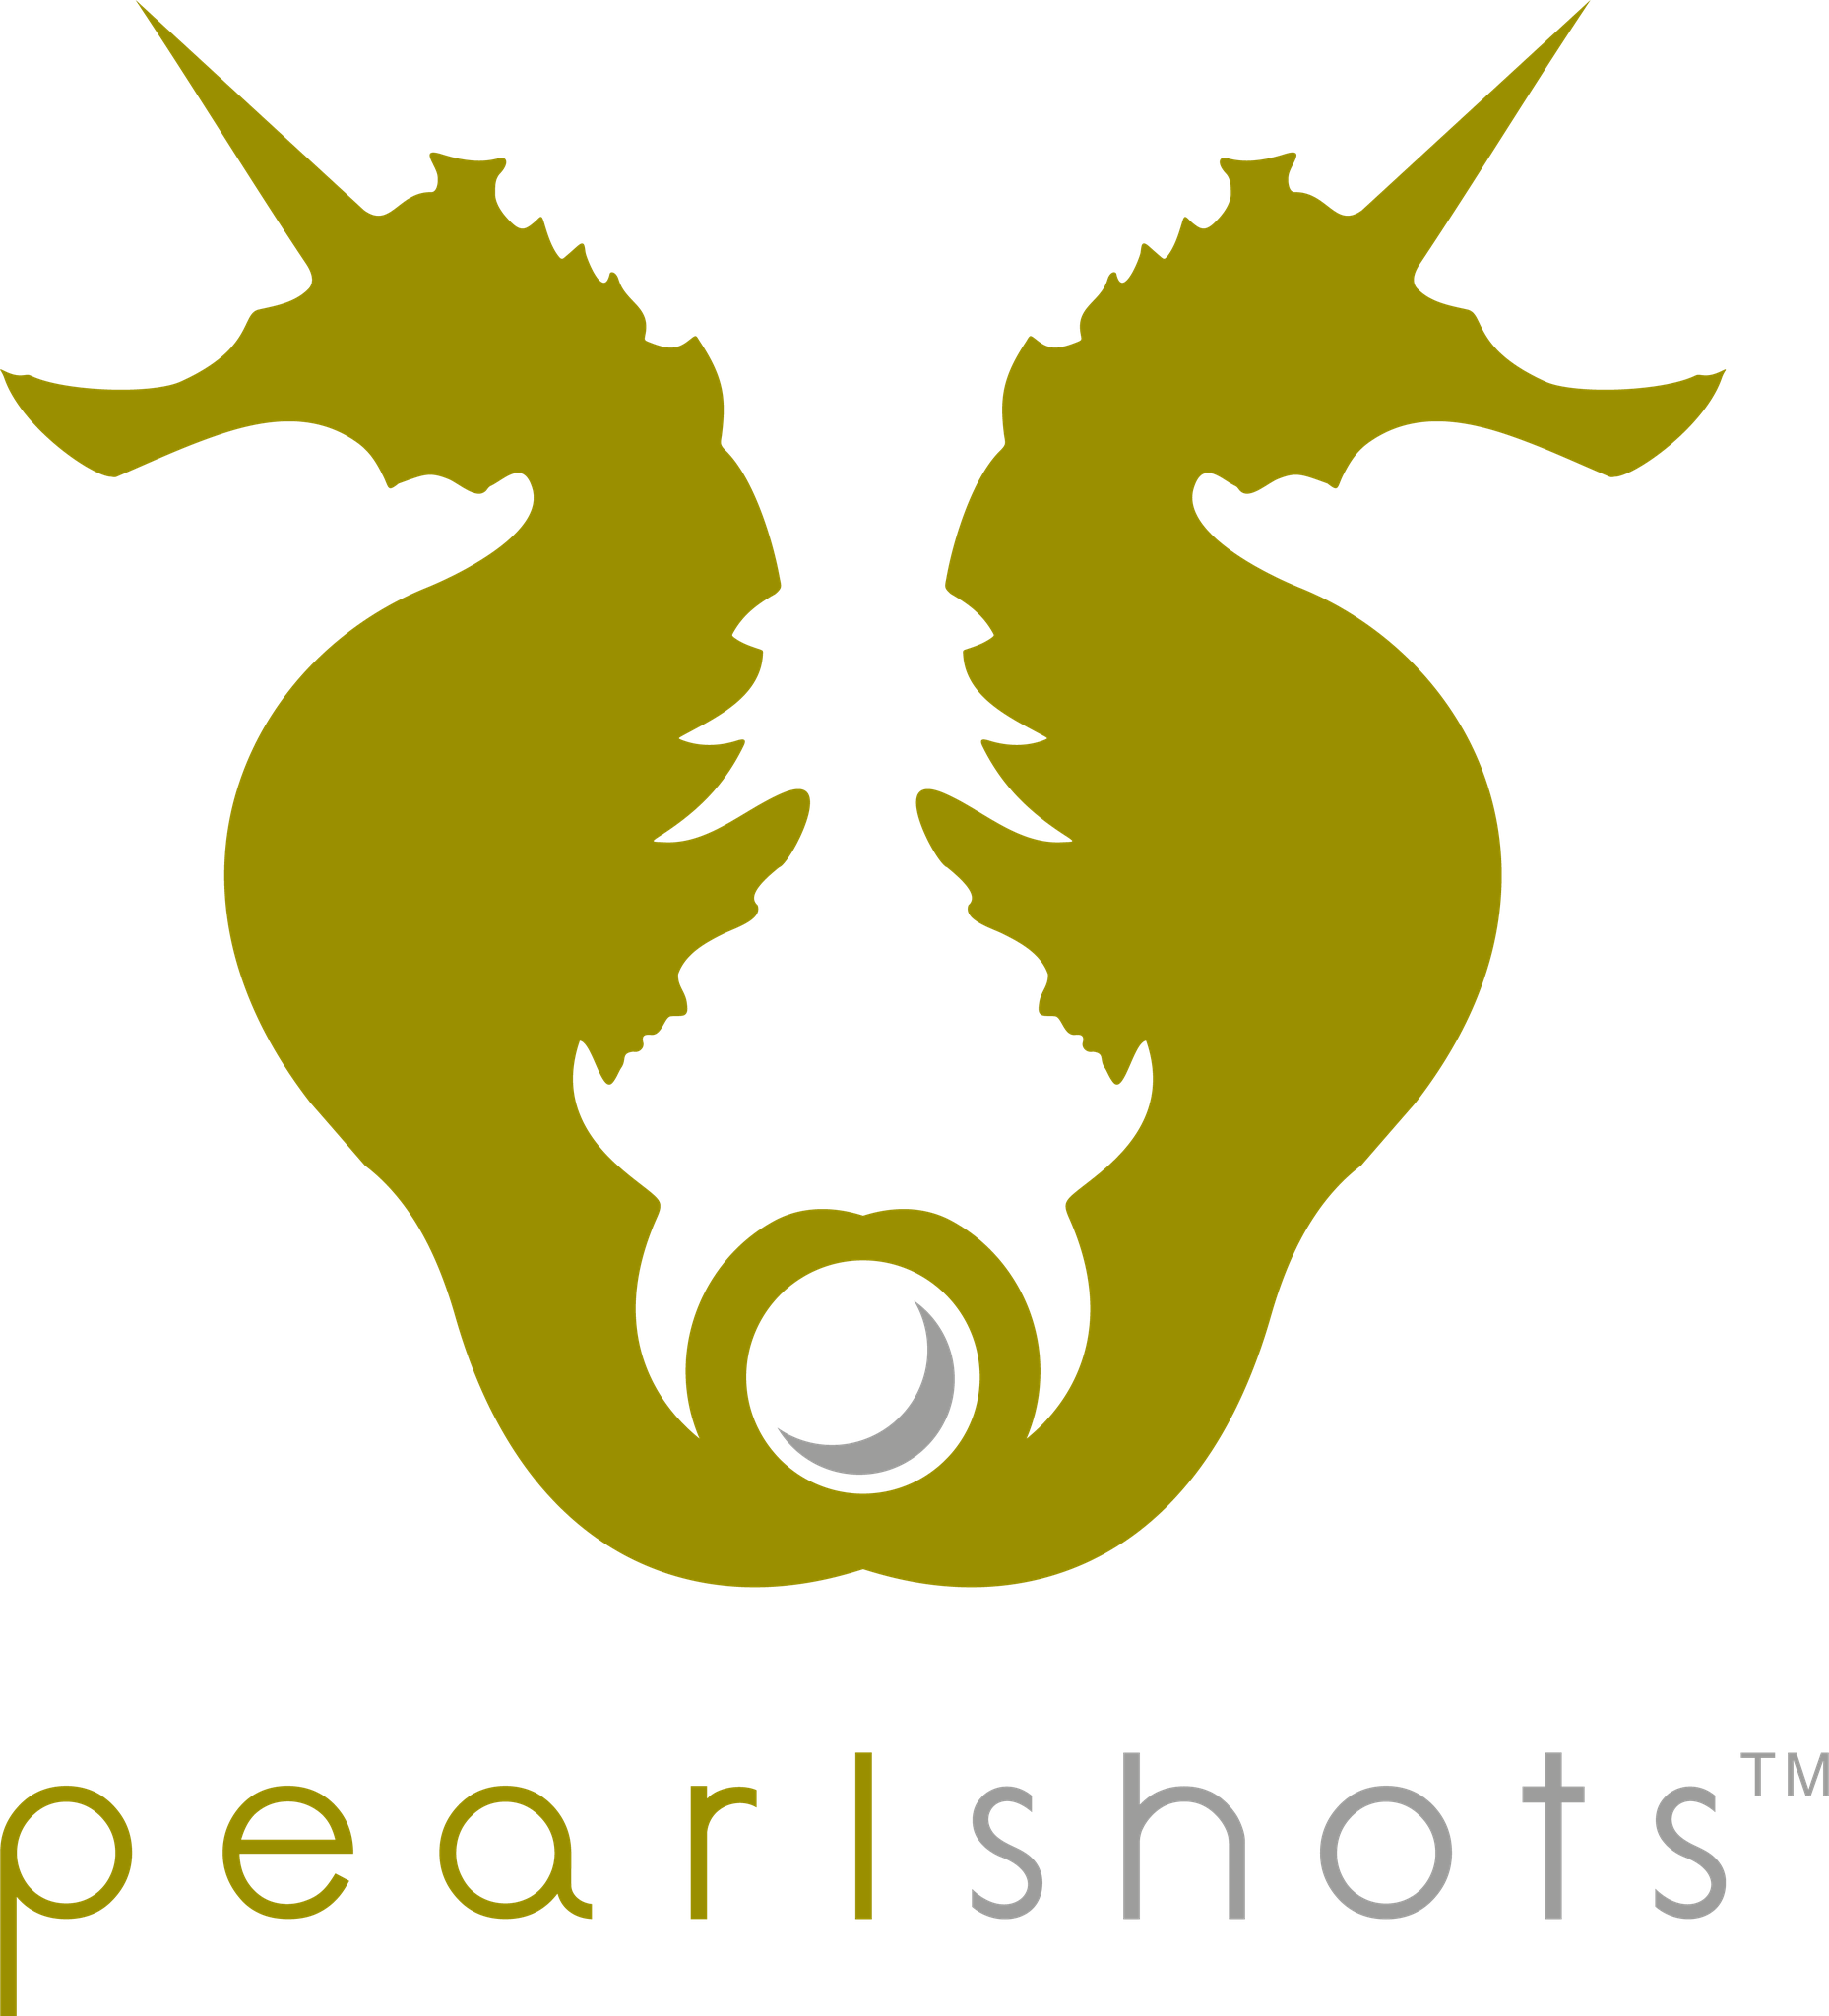 Pearl Shots